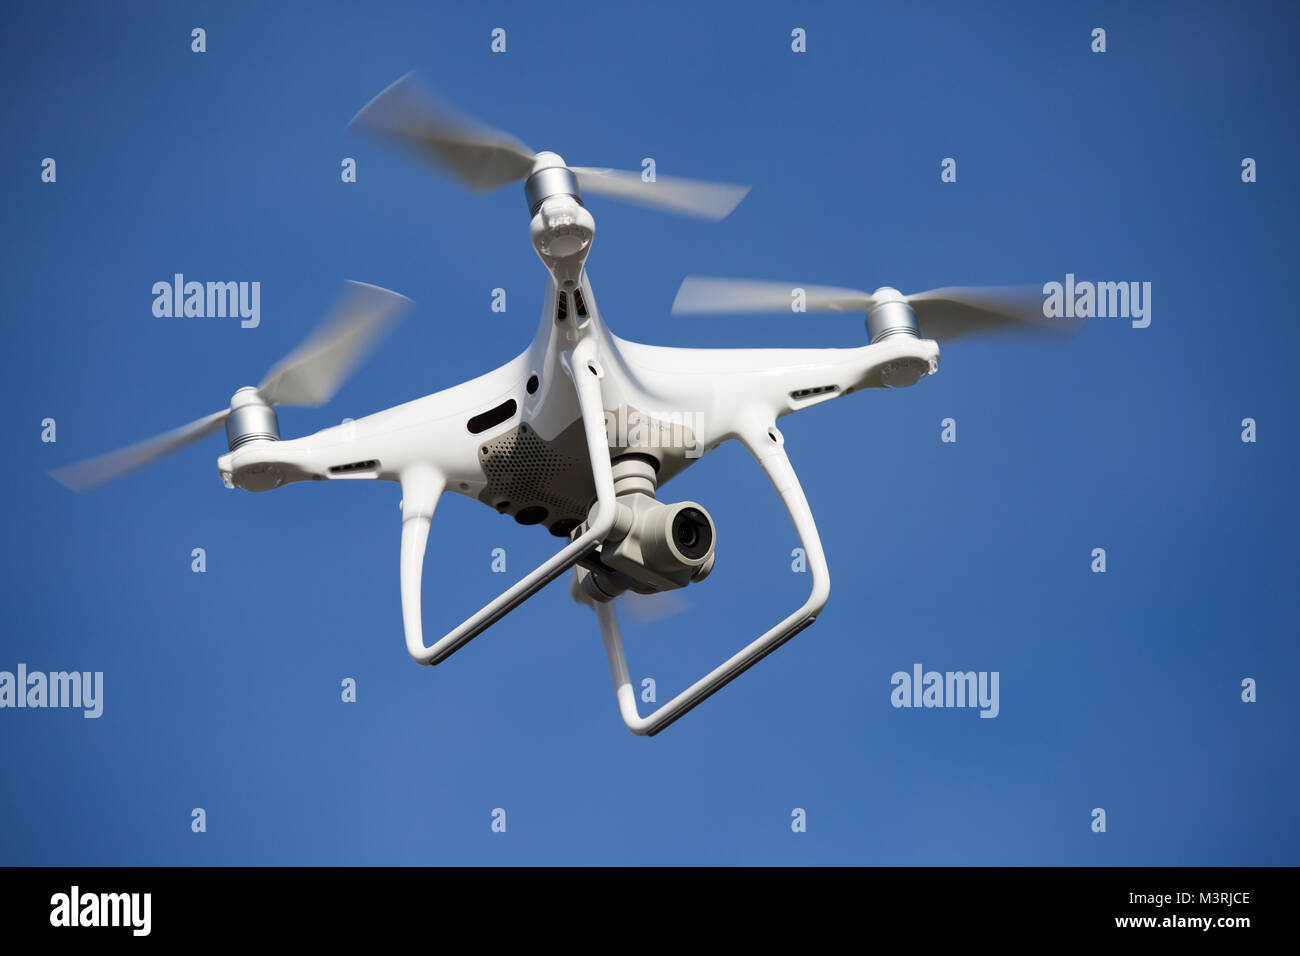 DJI Phantom 4 Pro drone volando Fotografía de stock - Alamy